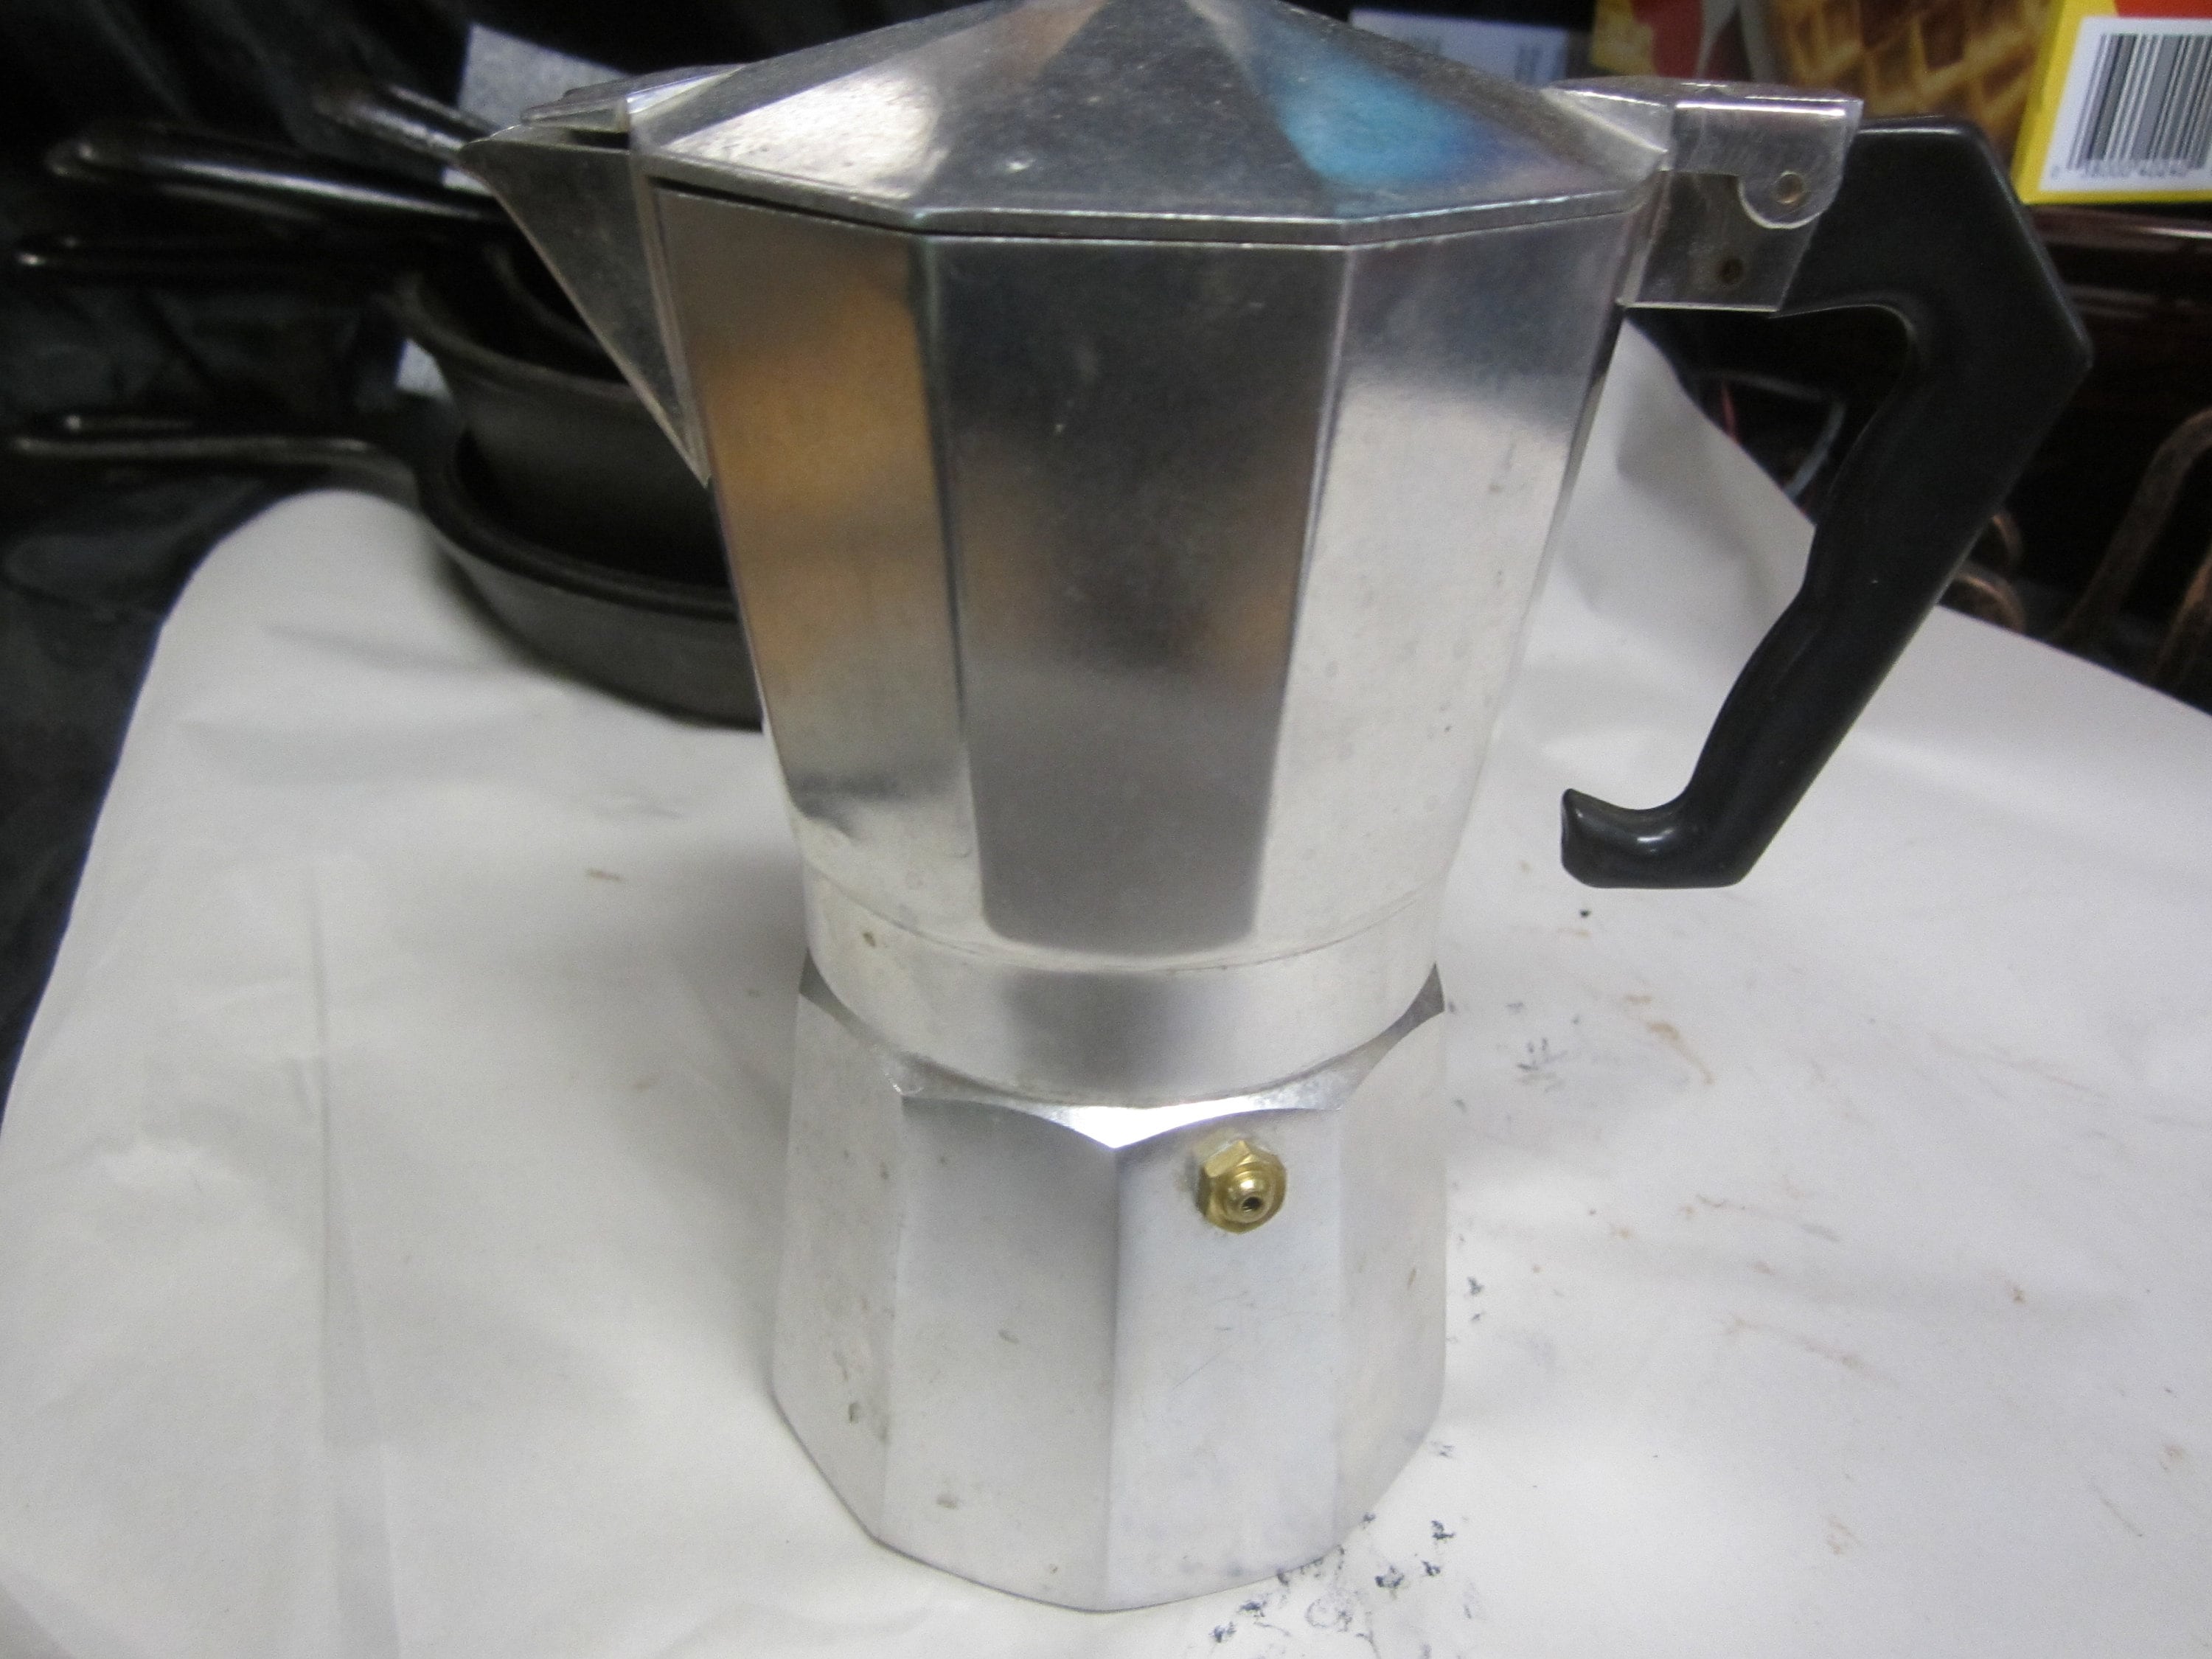 Vintage Coffee Maker, 2 Cups Coffee Maker, Small Coffee Maker, Espresso  Maker Labeled moka Imperia, Mini Express Stove Top Coffee Maker 